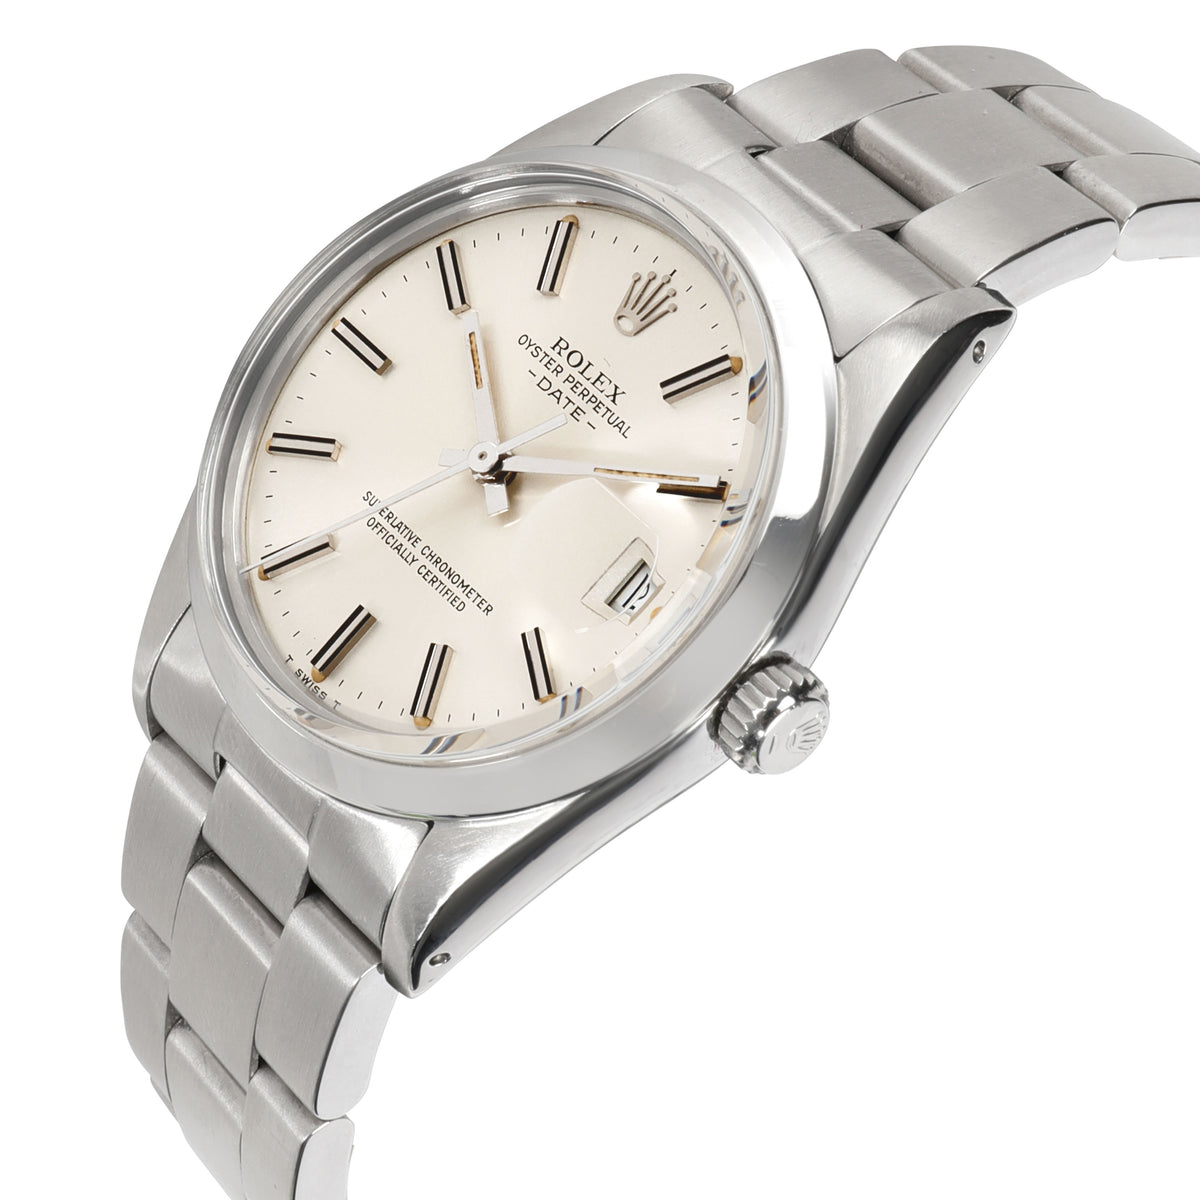 Rolex Date 15000 Men's Watch in  Stainless Steel